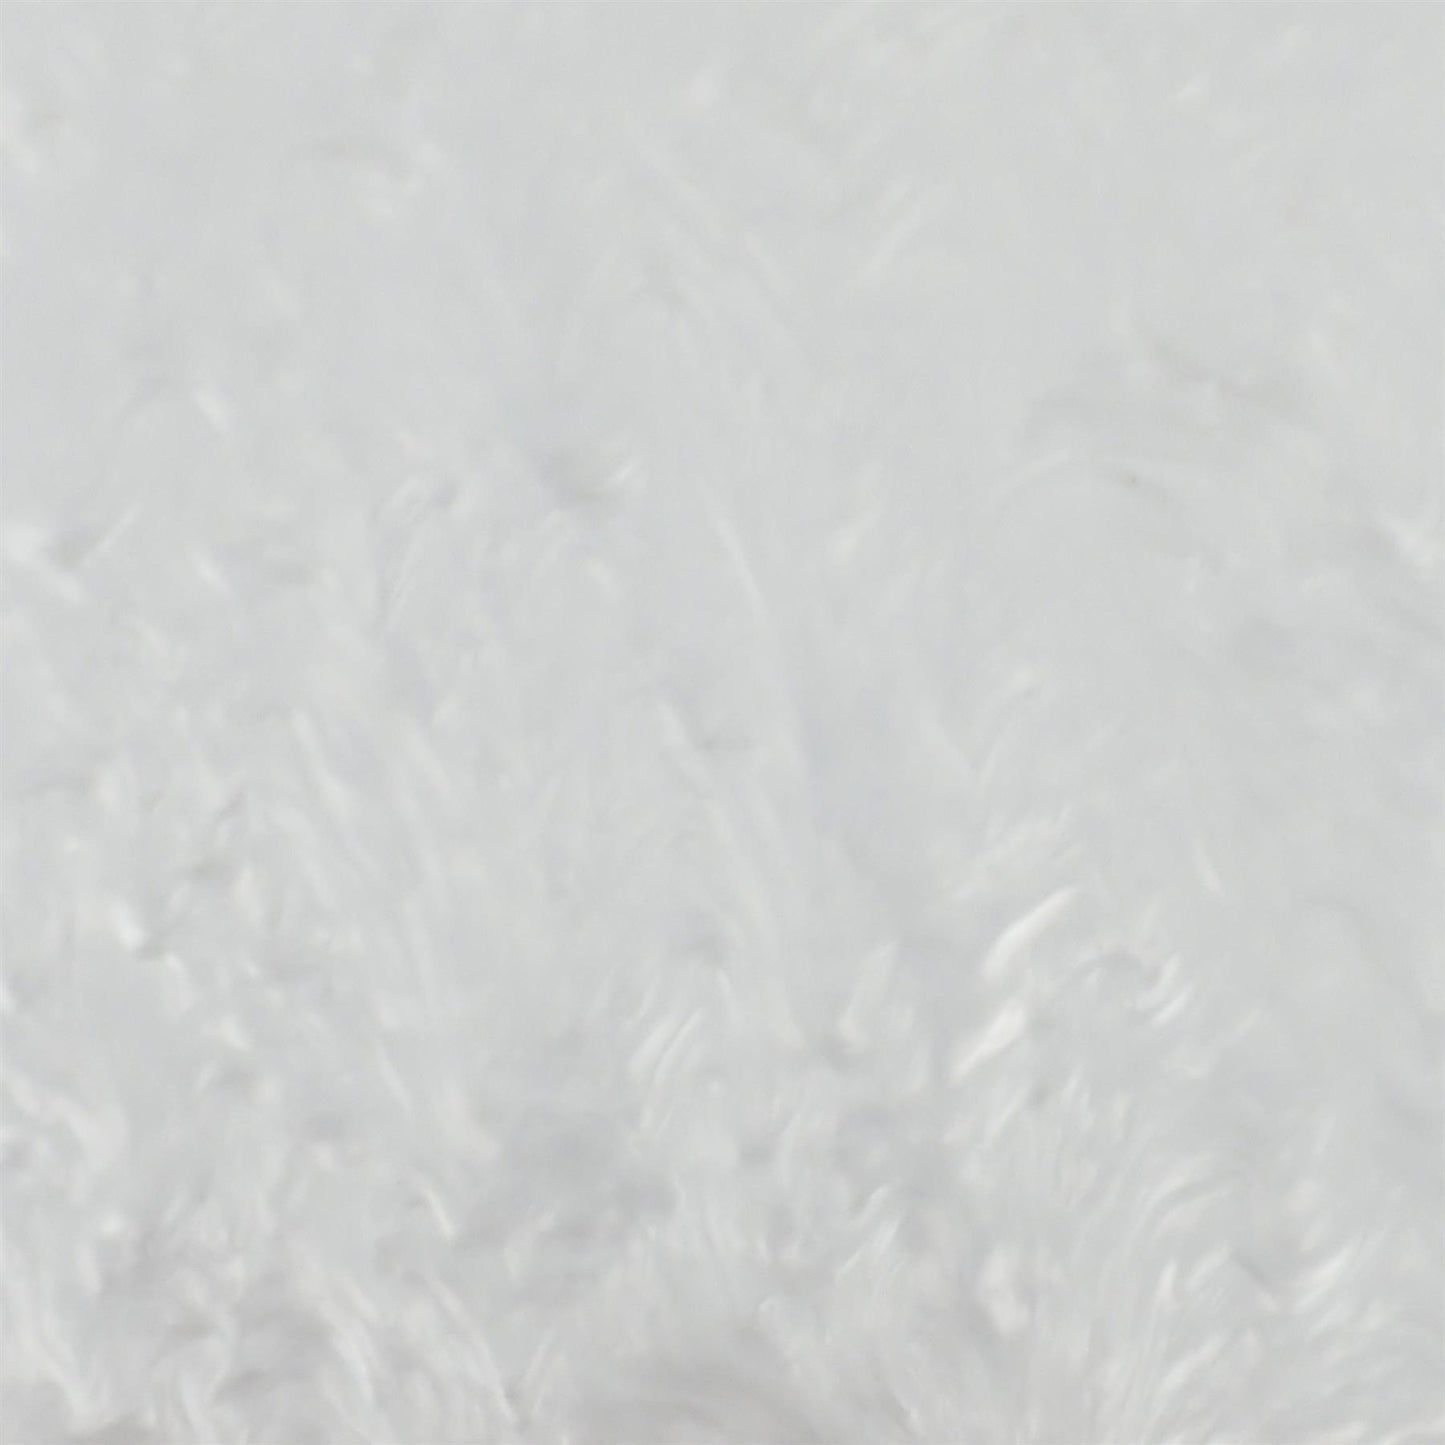 Incudo White Pearl Acrylic Sheet - 500x300x3mm